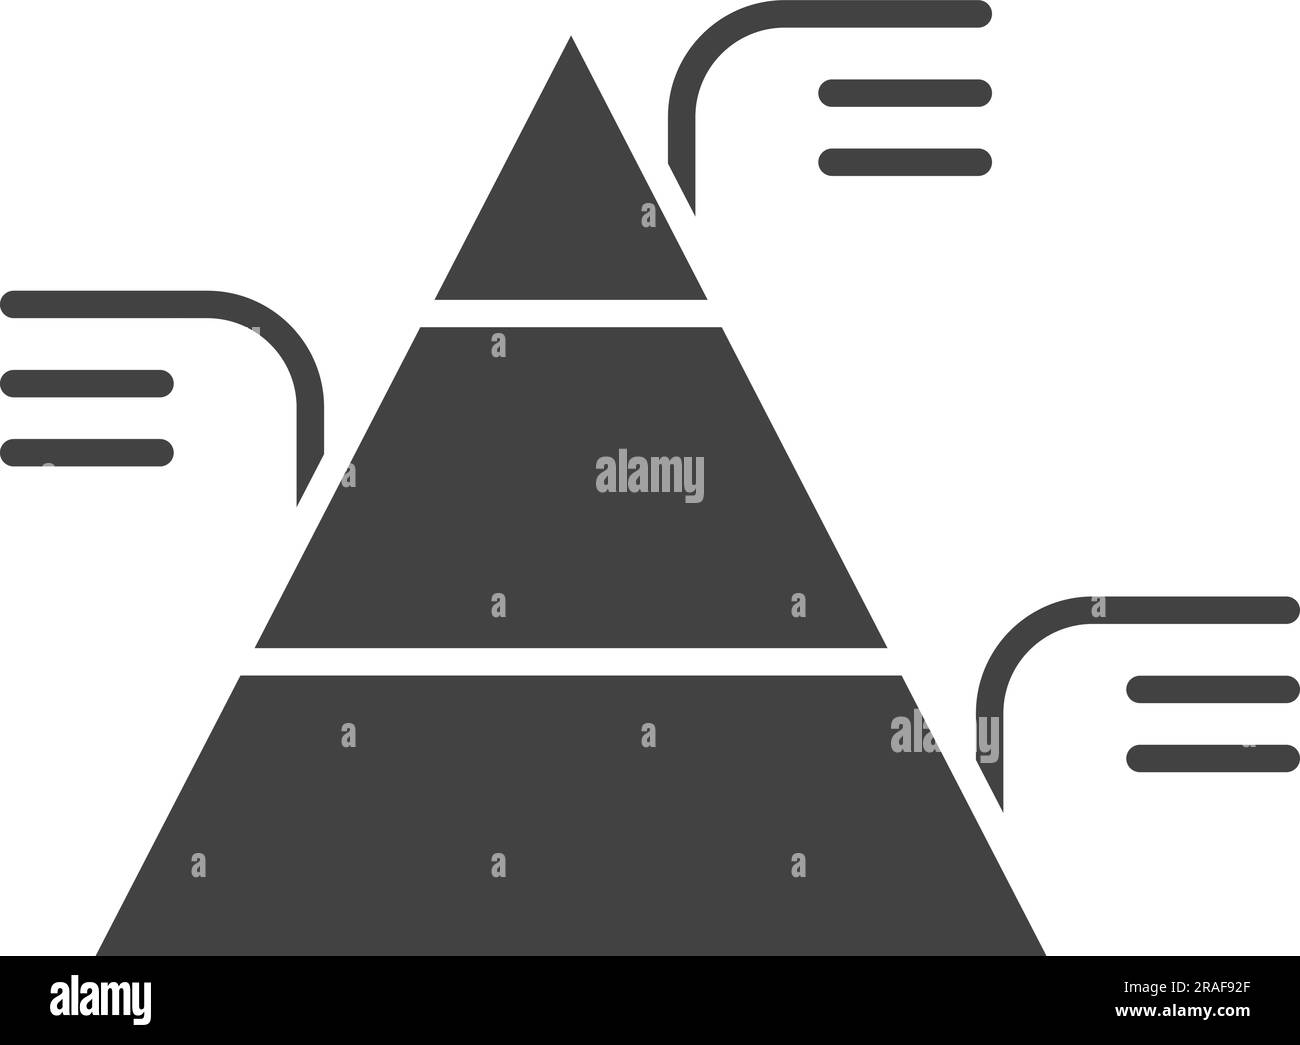 Pyramid Chart Icon Image. Stock Vector